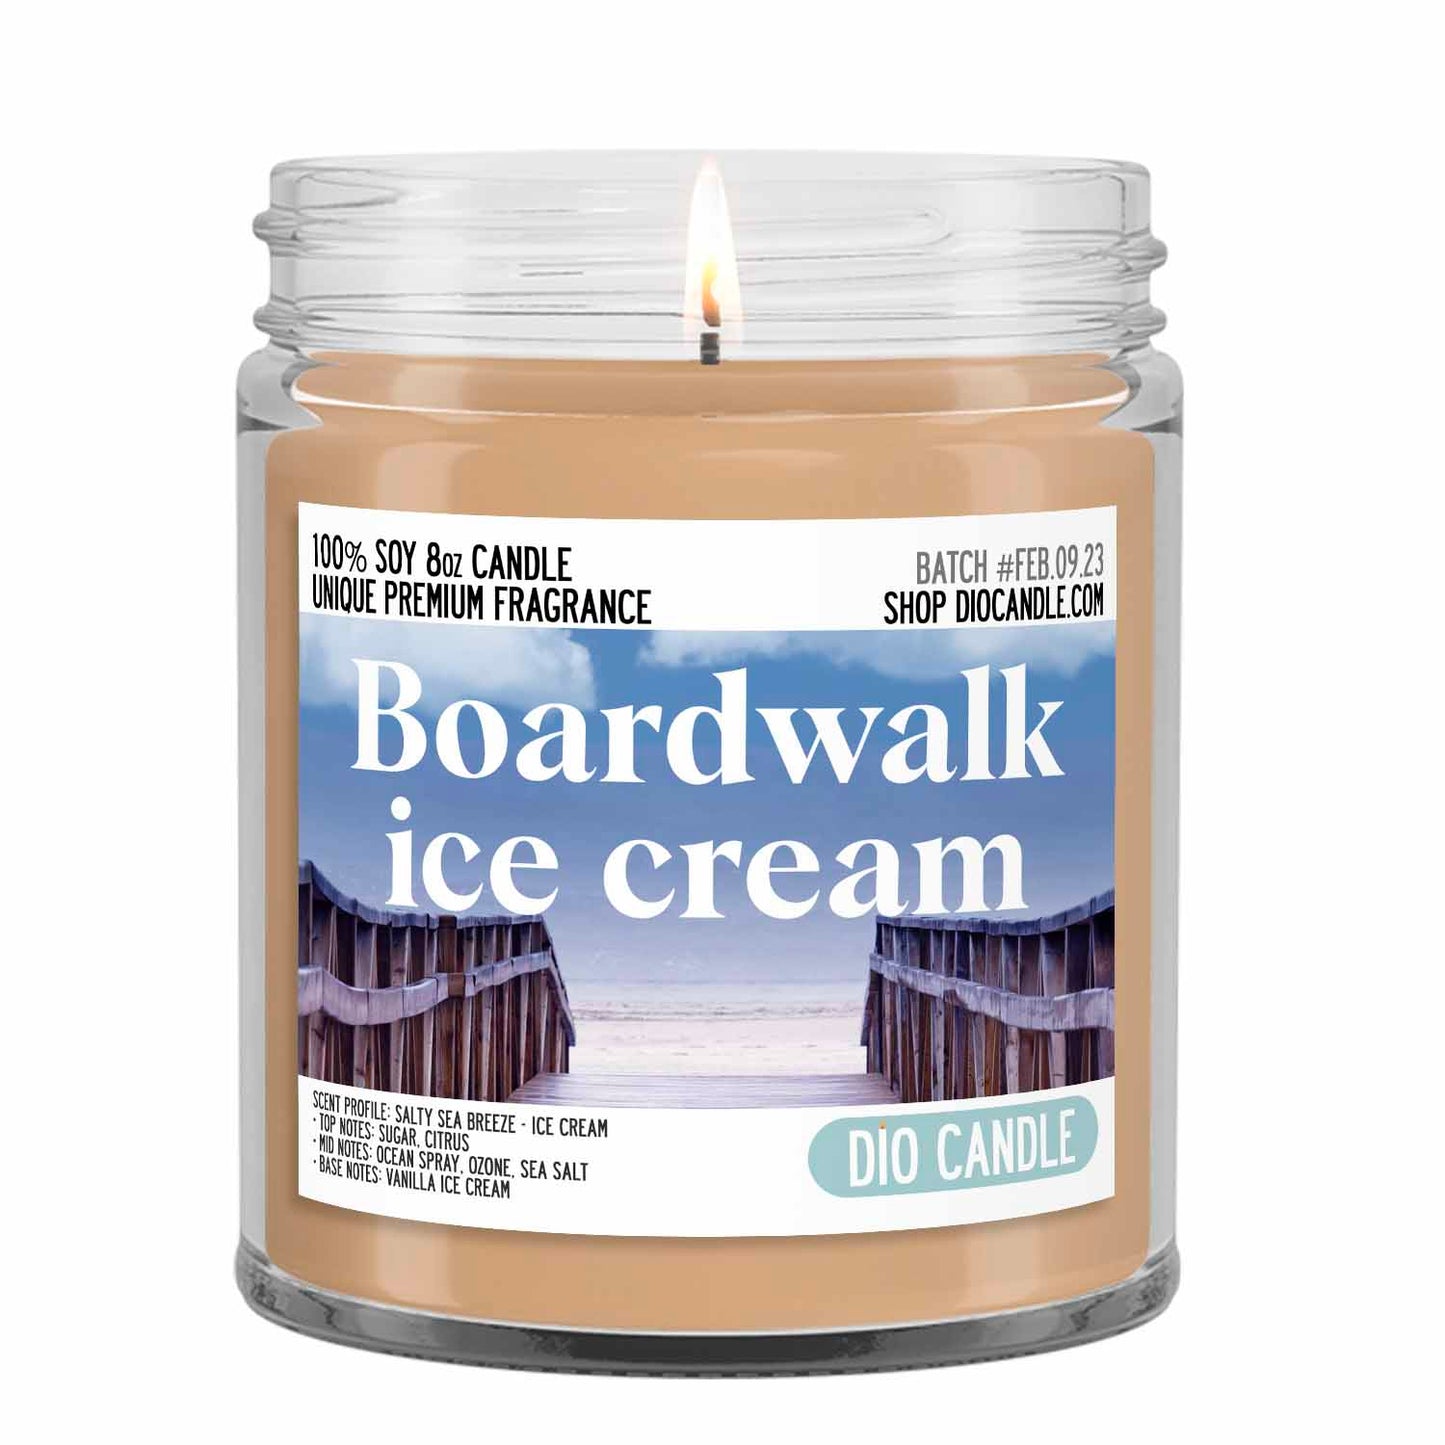 Boardwalk Ice Cream Candle